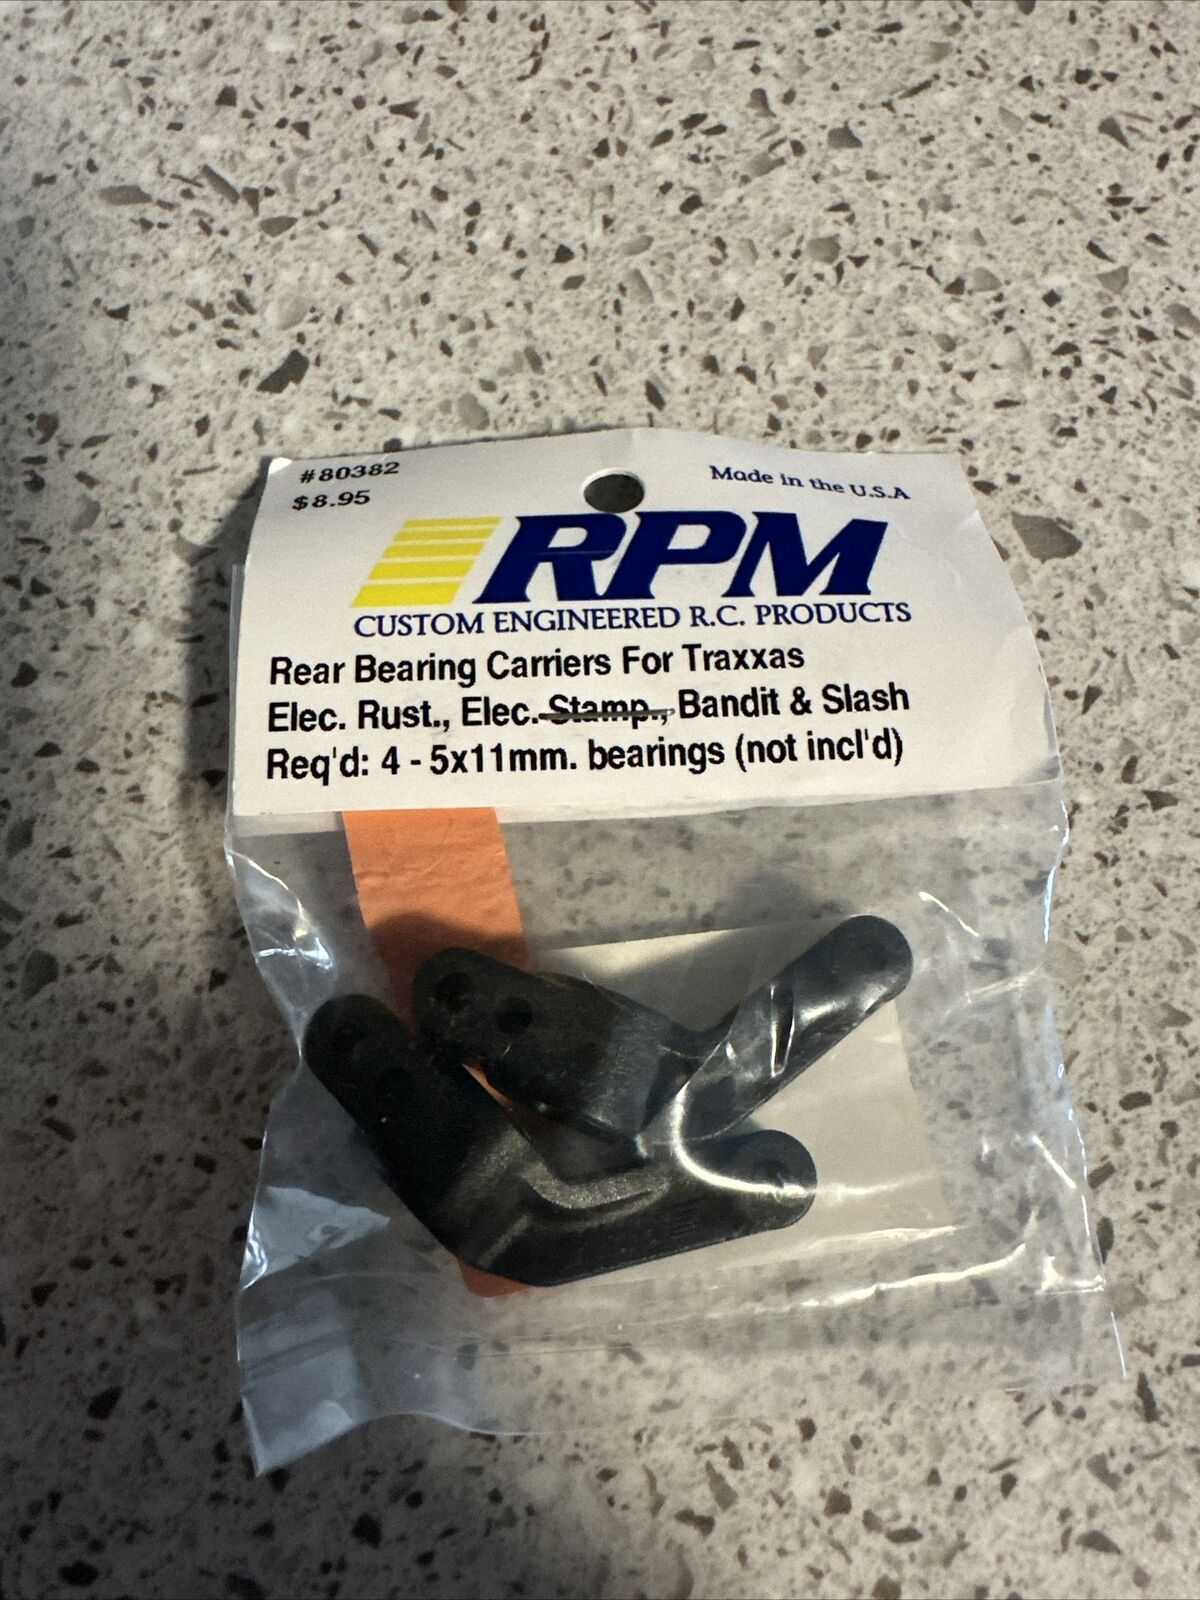 NEW RPM Traxxas Rustler Stampede Bandit Slash Rear Bearing Carriers 80382